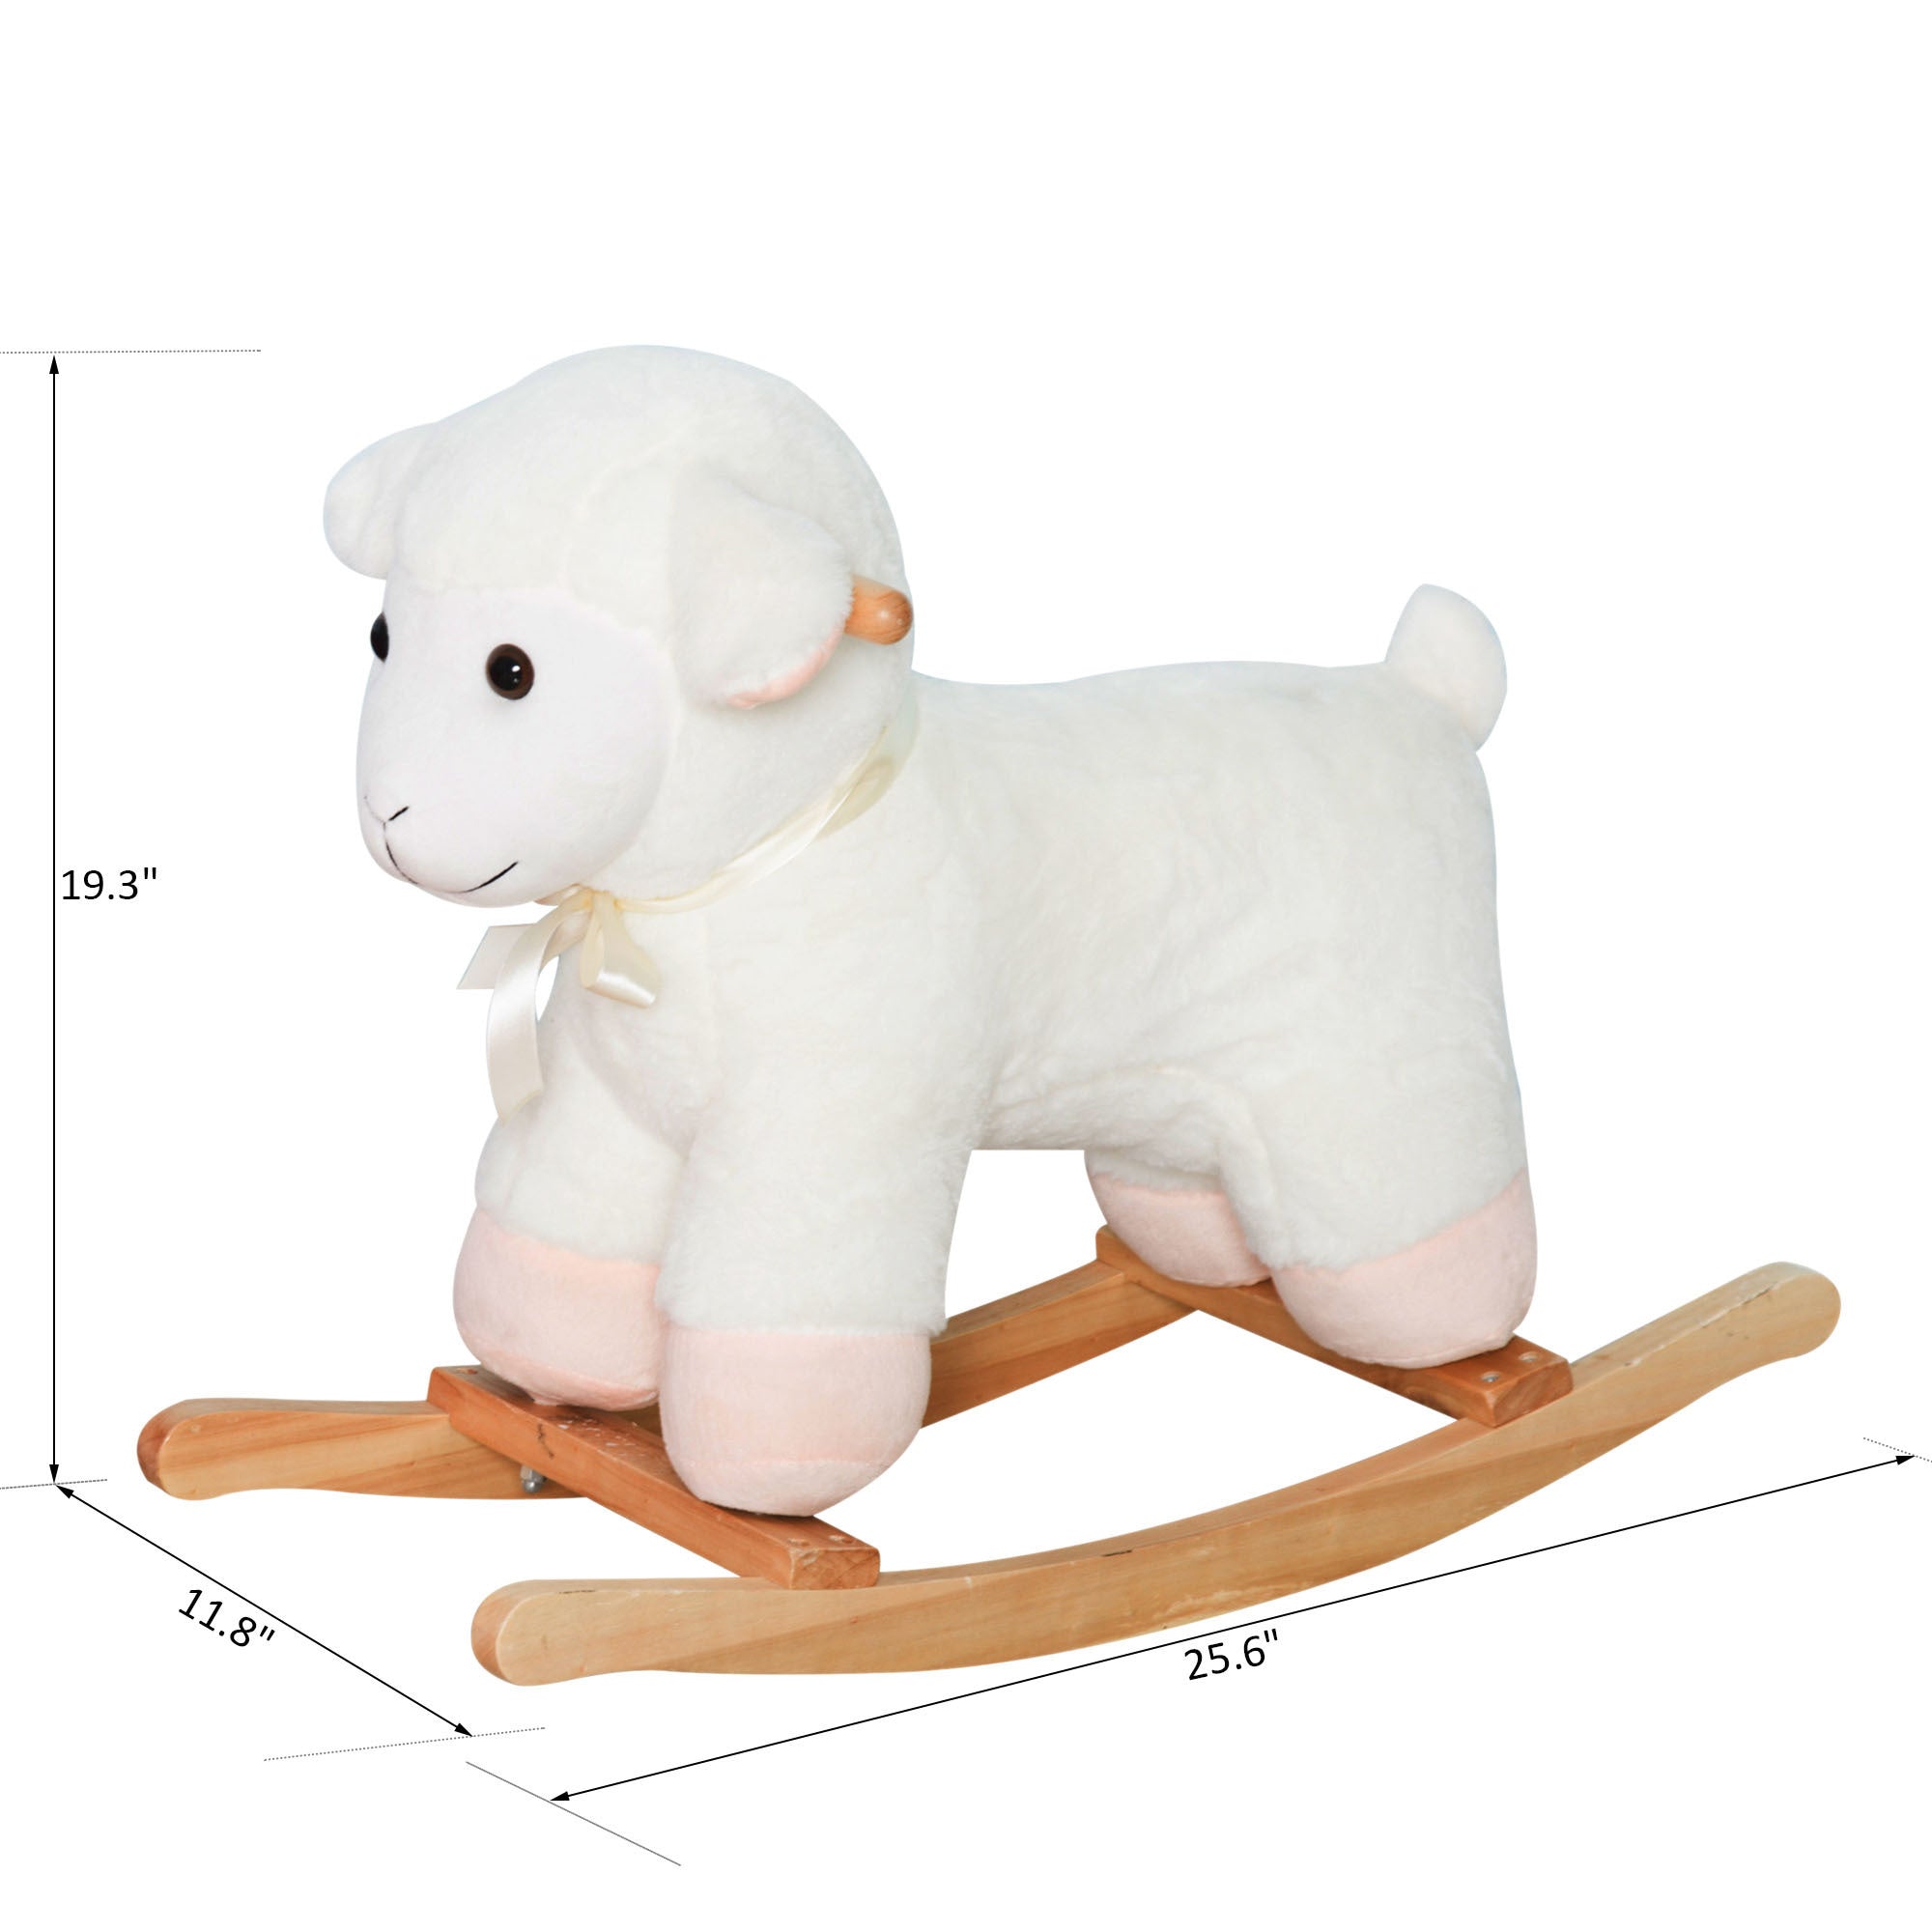 Rocking Horse Sheep, Nursery Stuffed Animal Ride On Rocker for Kids, Wooden Plush, White